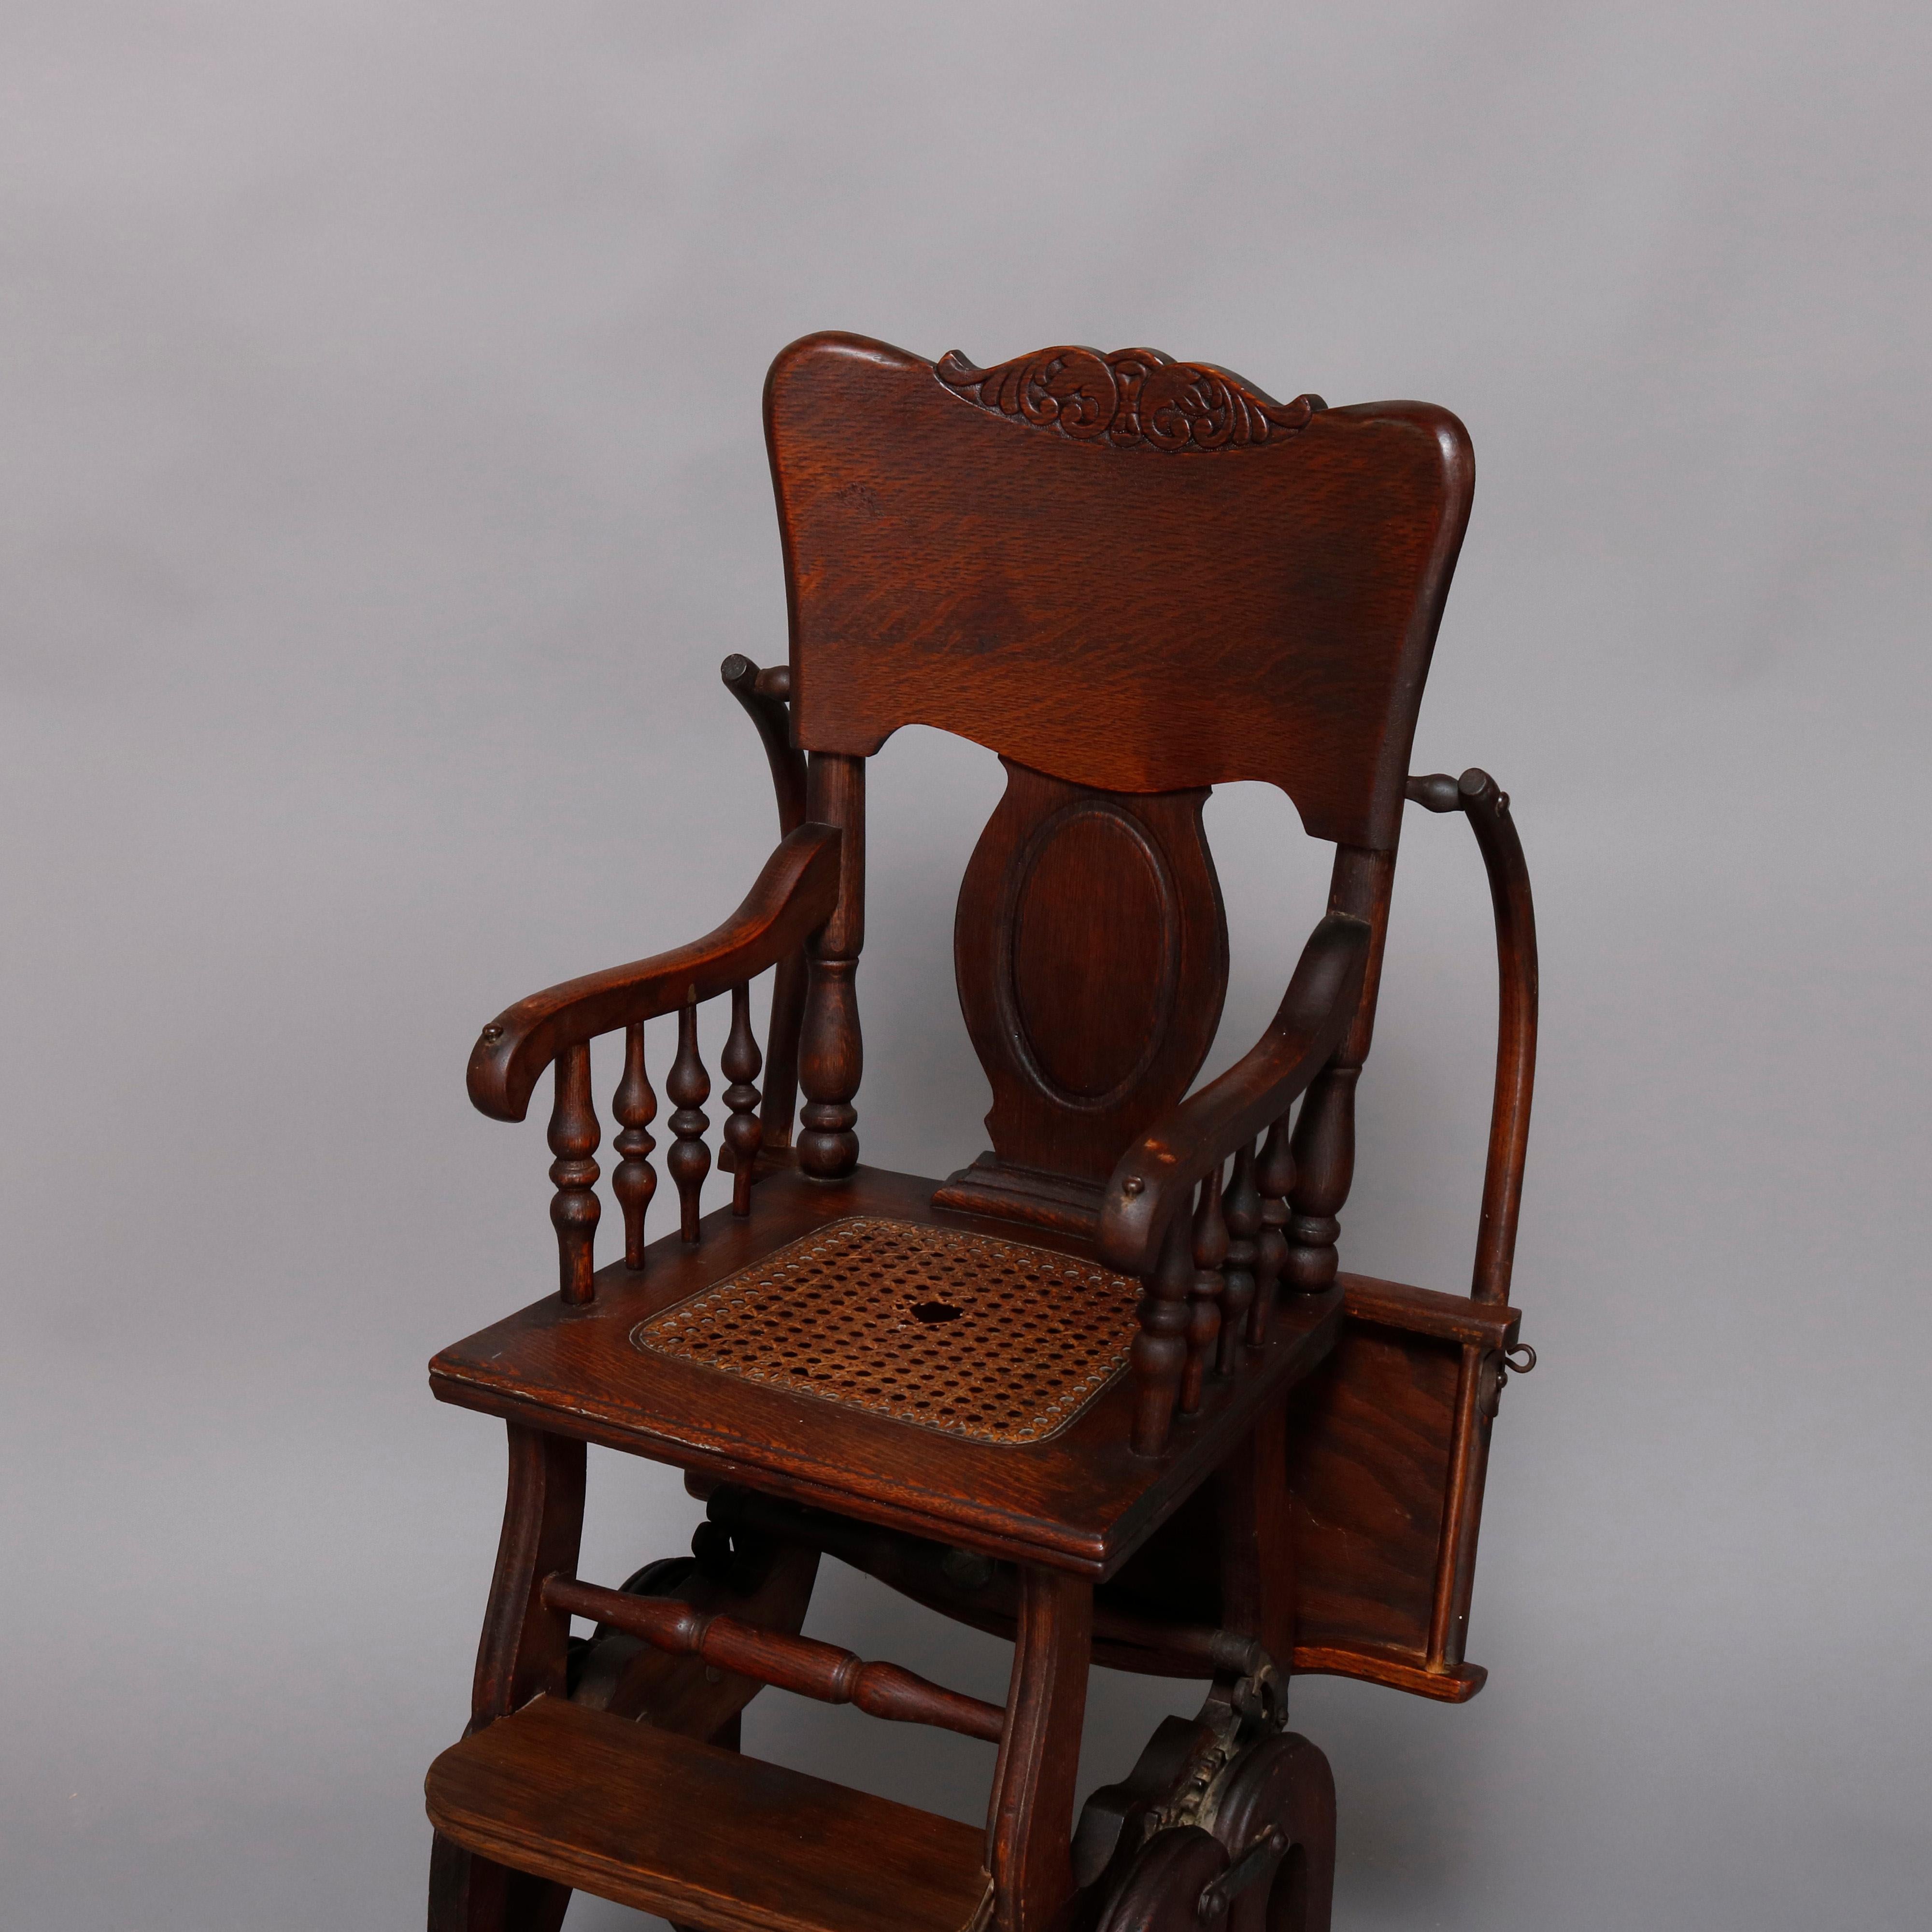 American Antique Oak Pressed Carved Adjustable Conversion High Chair Rocker, circa 1910